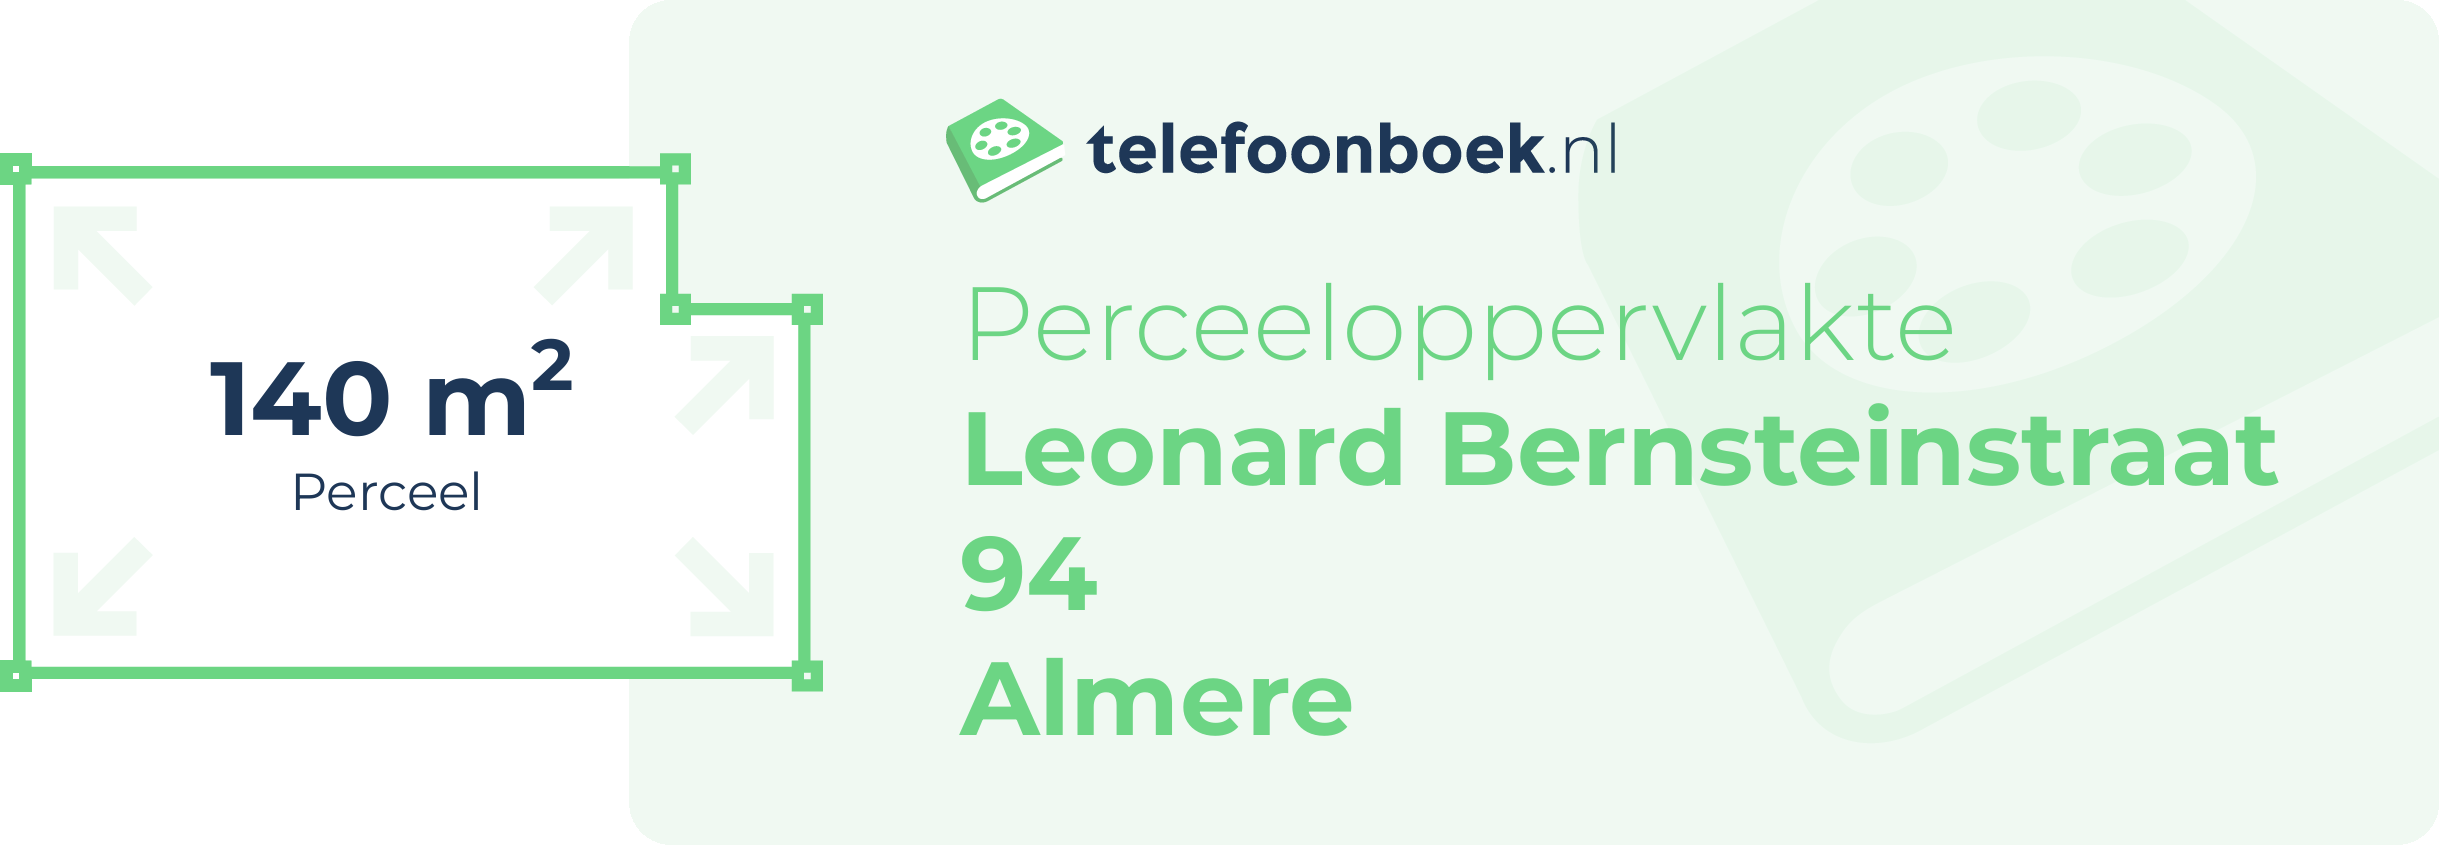 Perceeloppervlakte Leonard Bernsteinstraat 94 Almere